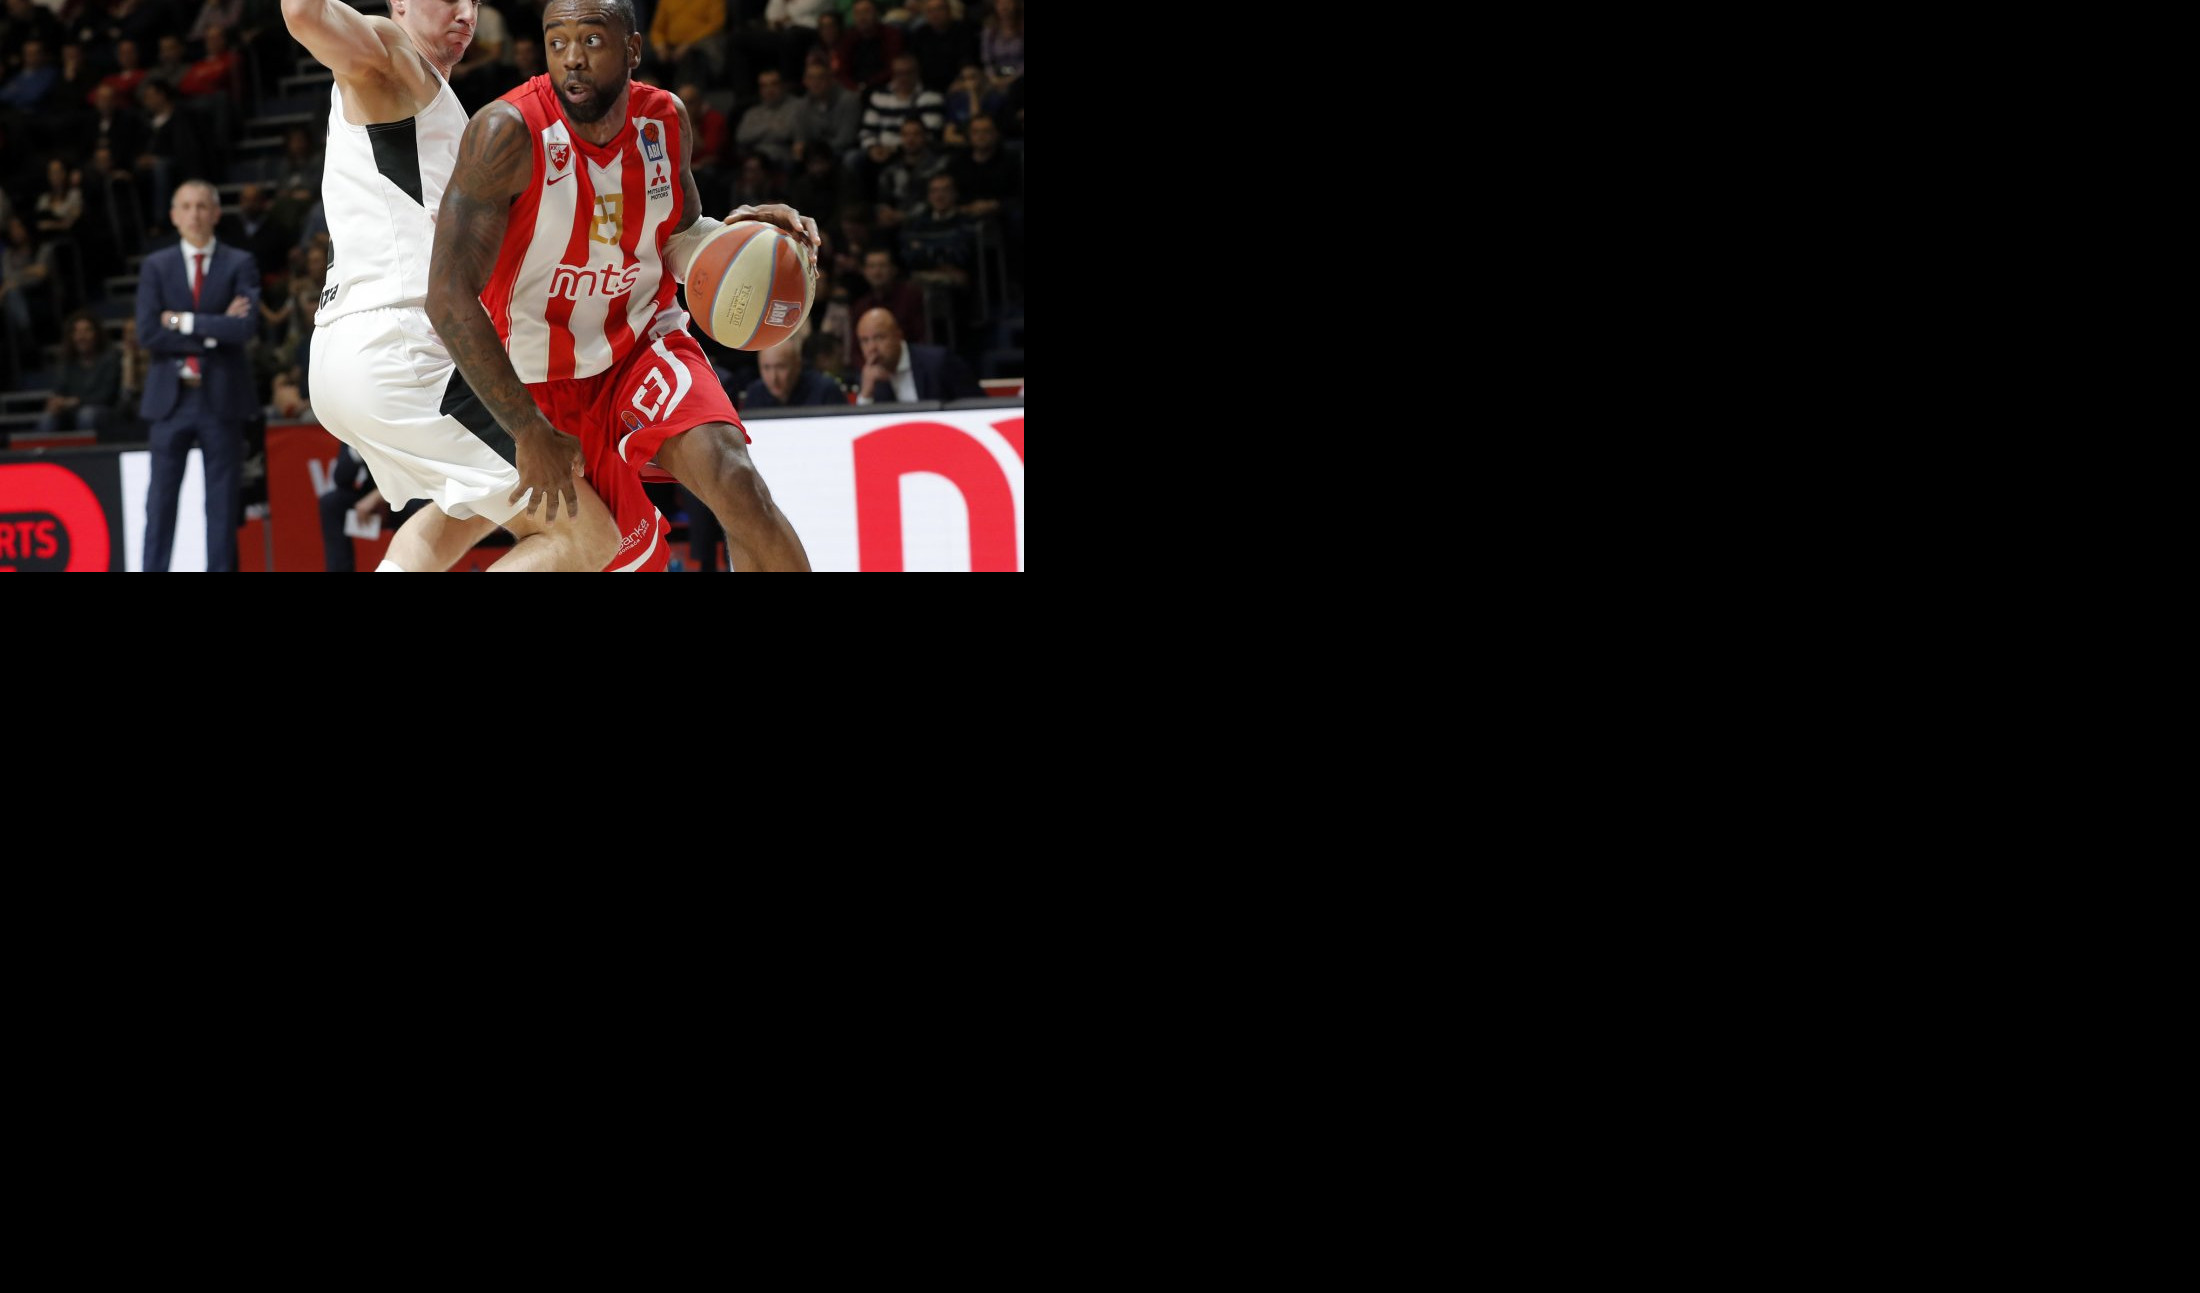 (FOTO) SPECIJALNA PODRŠKA! Jedan košarkaš Crvene zvezde ima dupli razlog da pobedi Partizan!